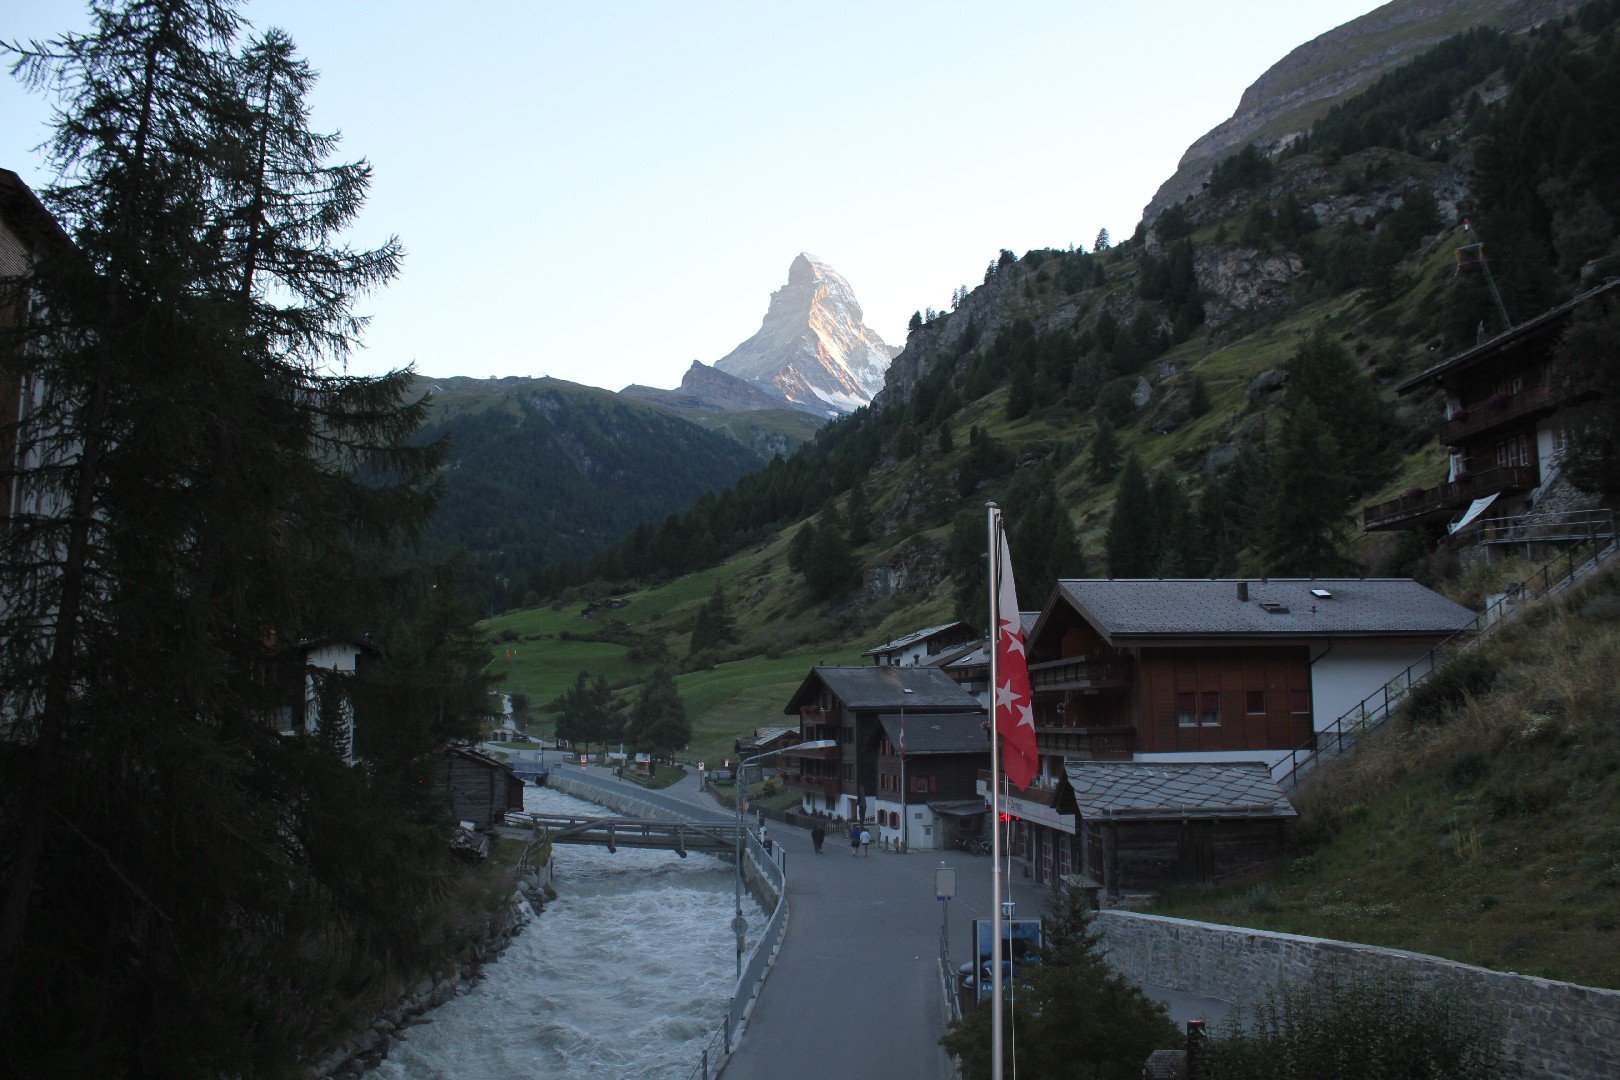 Matterhorn at dusk from the Hotel Alpenrose